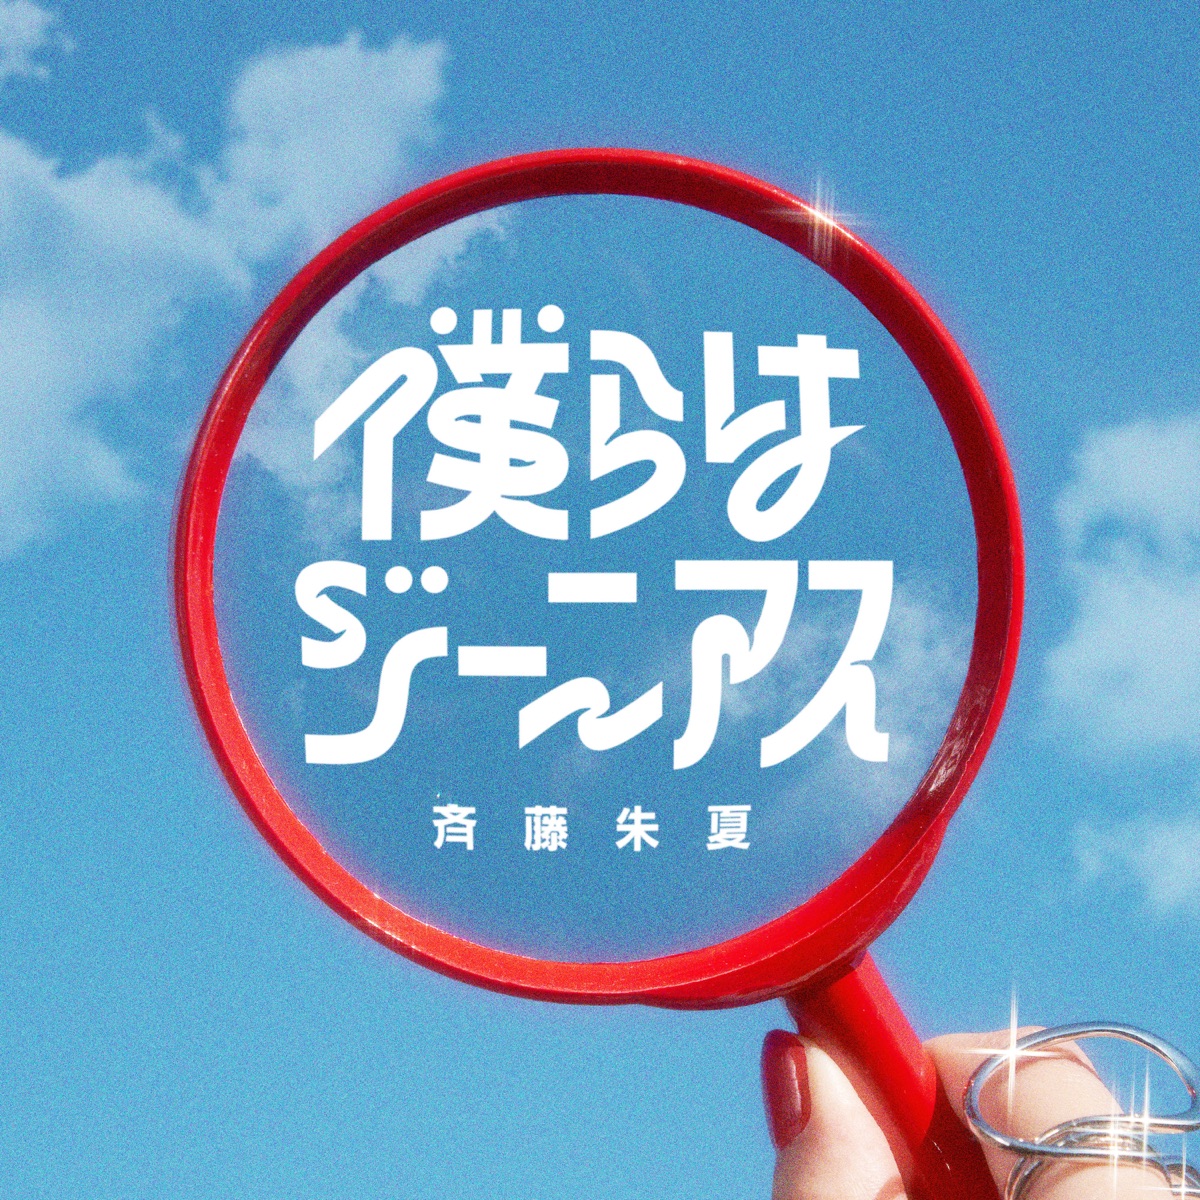 Cover art for『Shuka Saito - 最強じゃん？』from the release『Bokura wa Genius